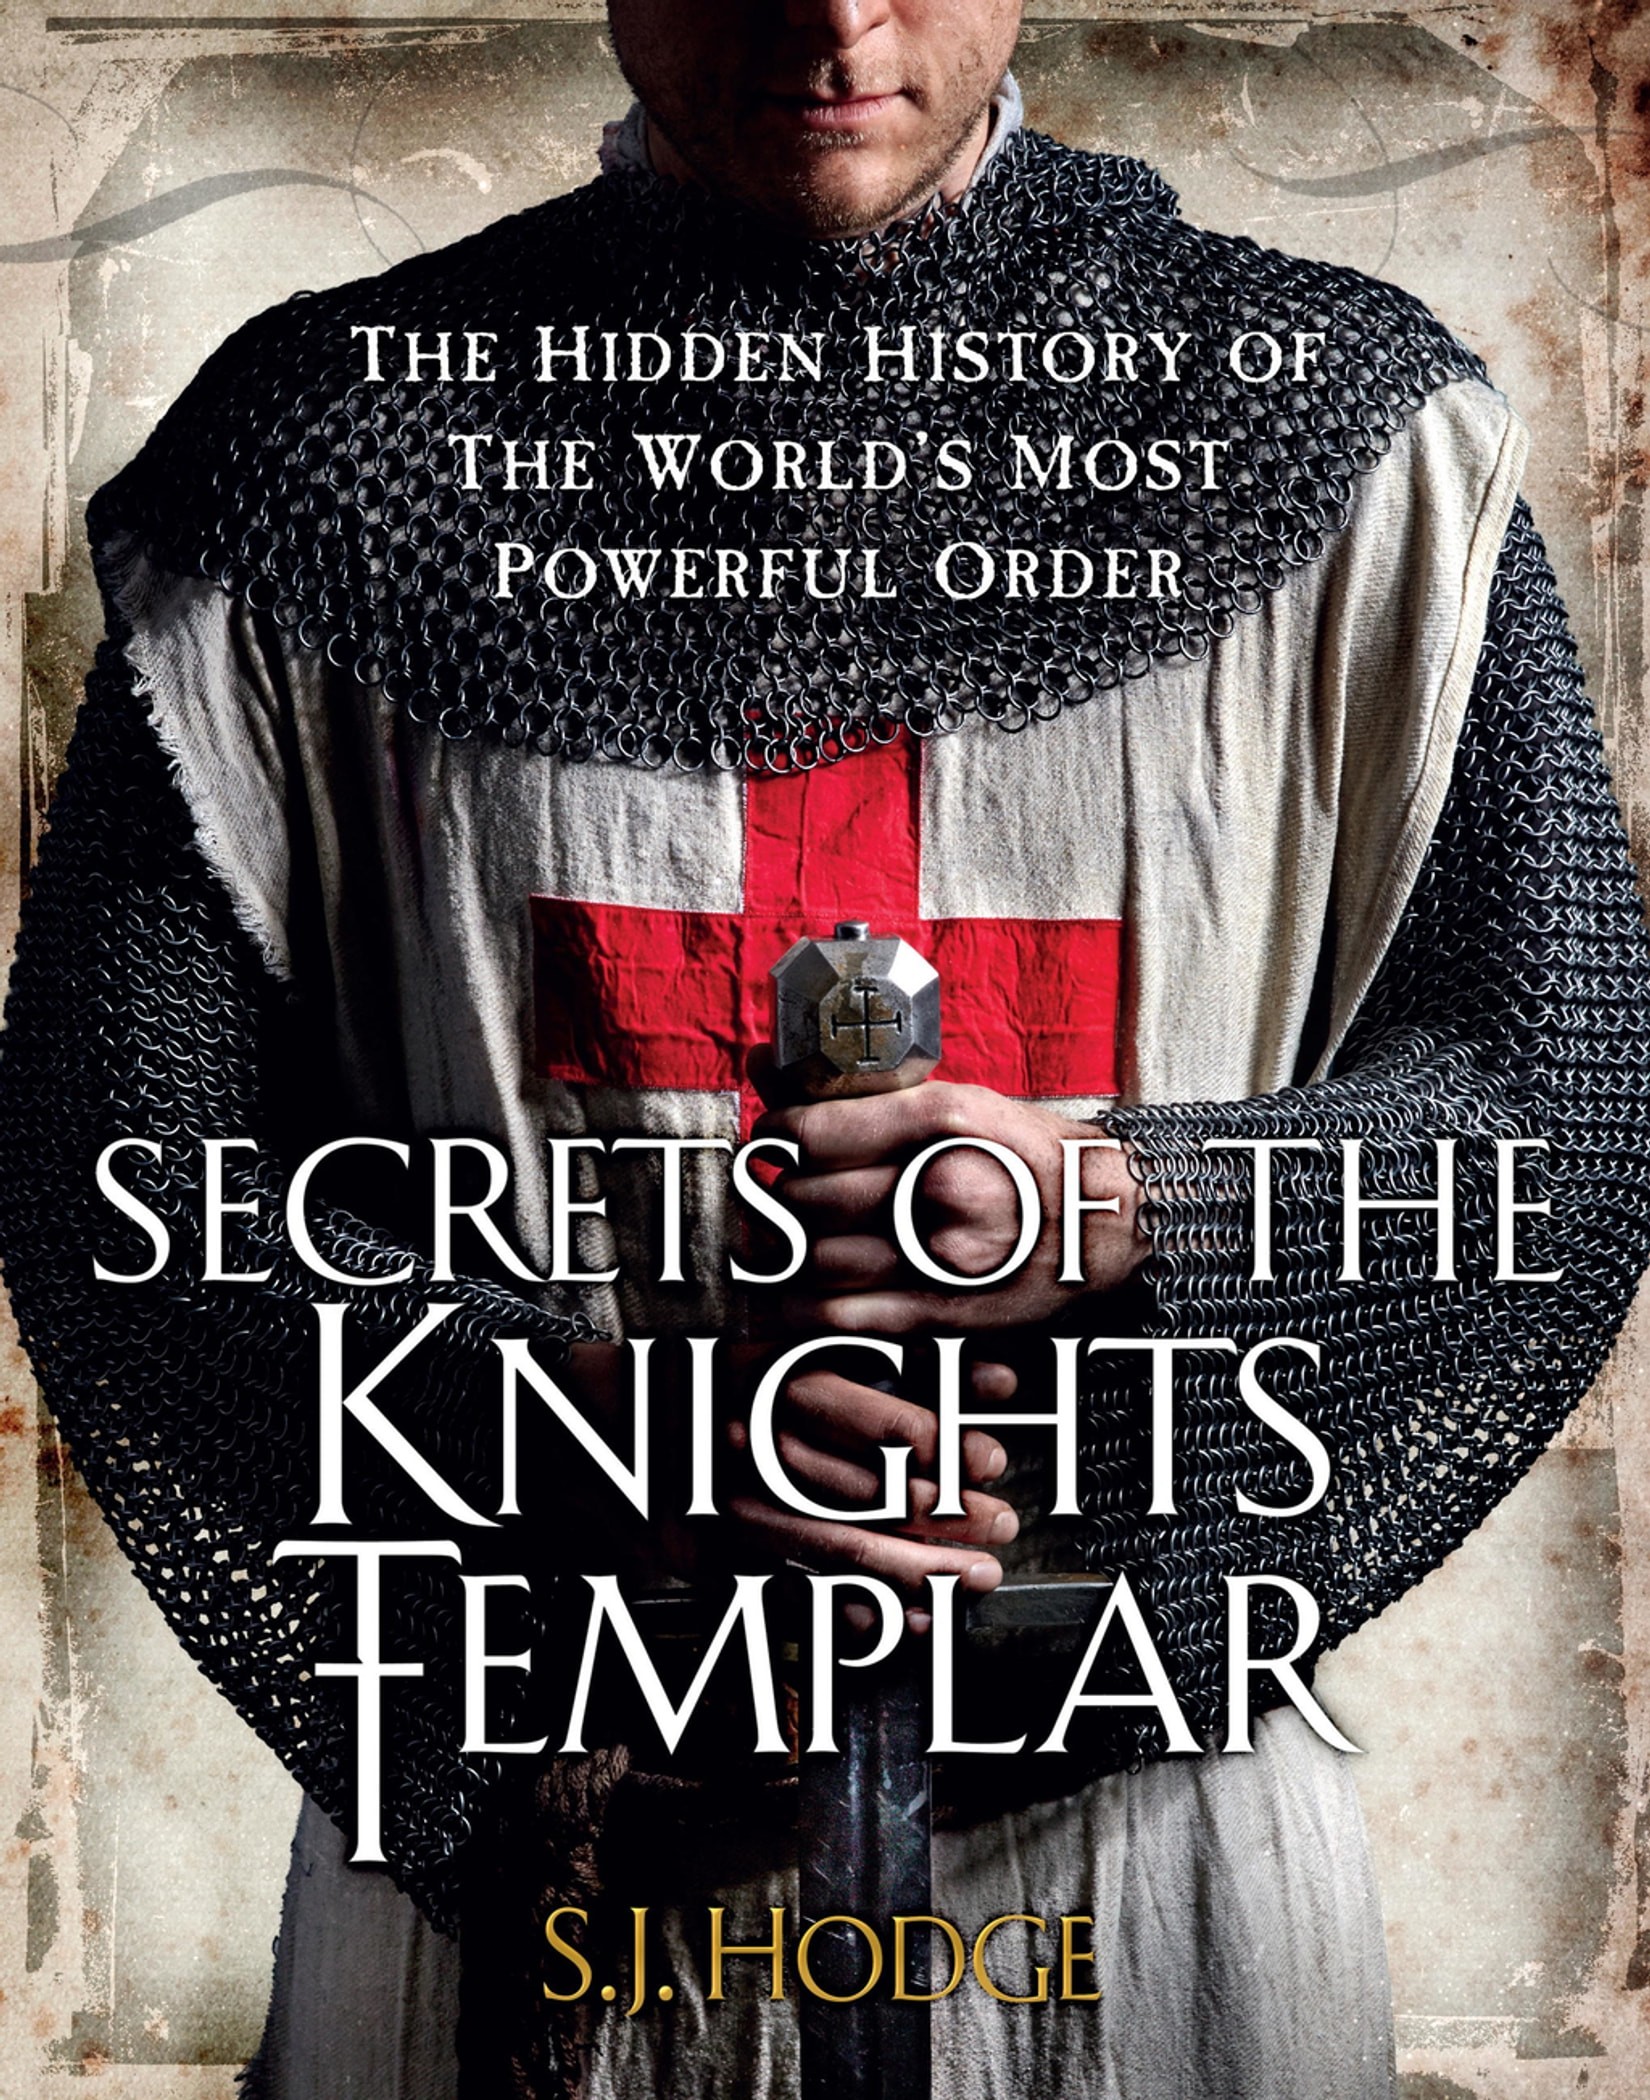 Secrets of the Knights Templar